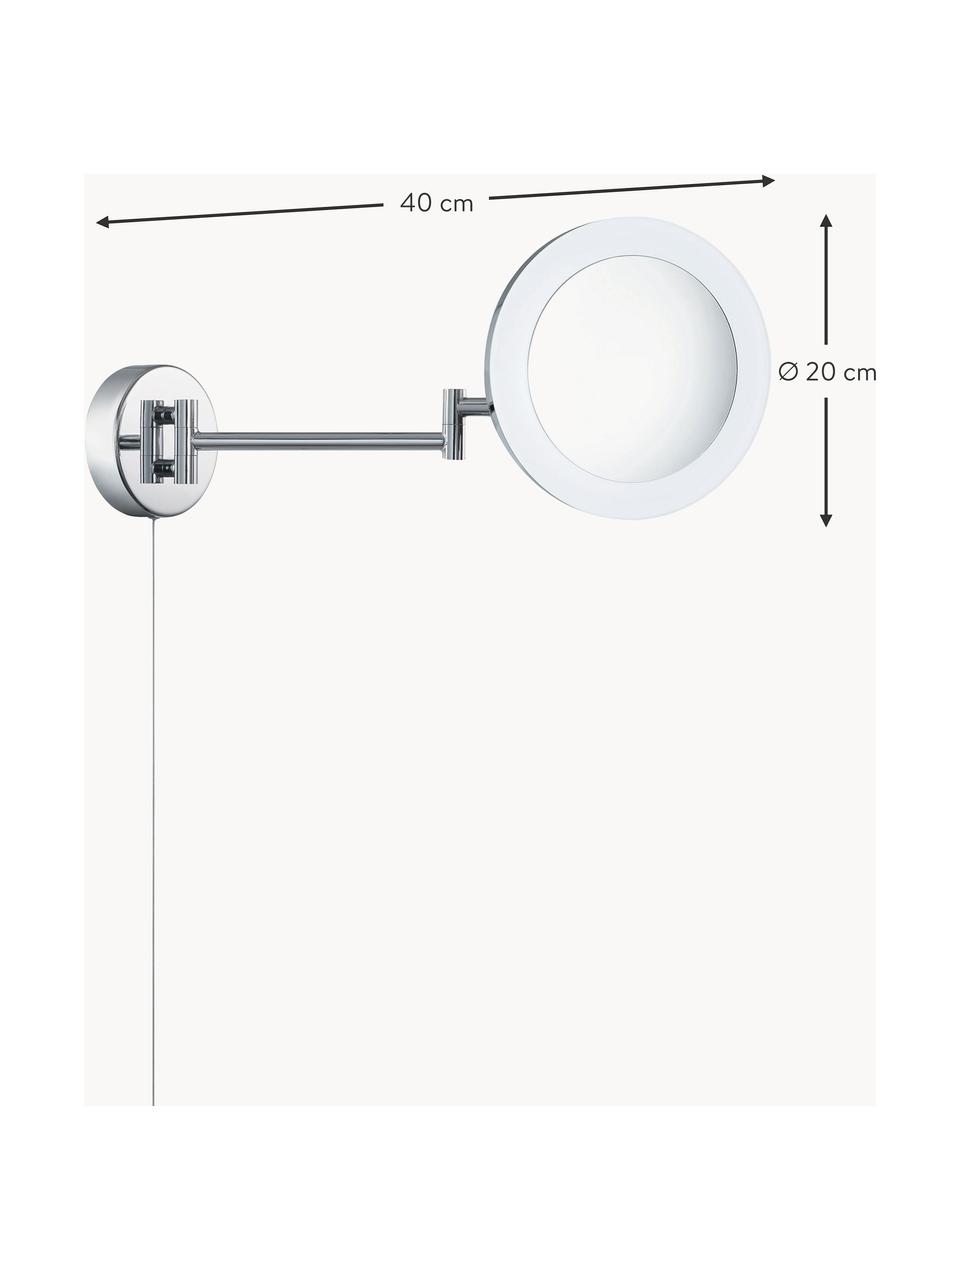 LED-make-up spiegel Magnifying met vergroting, Frame: gecoat staal, Zilverkleurig, B 40 x H 20 cm